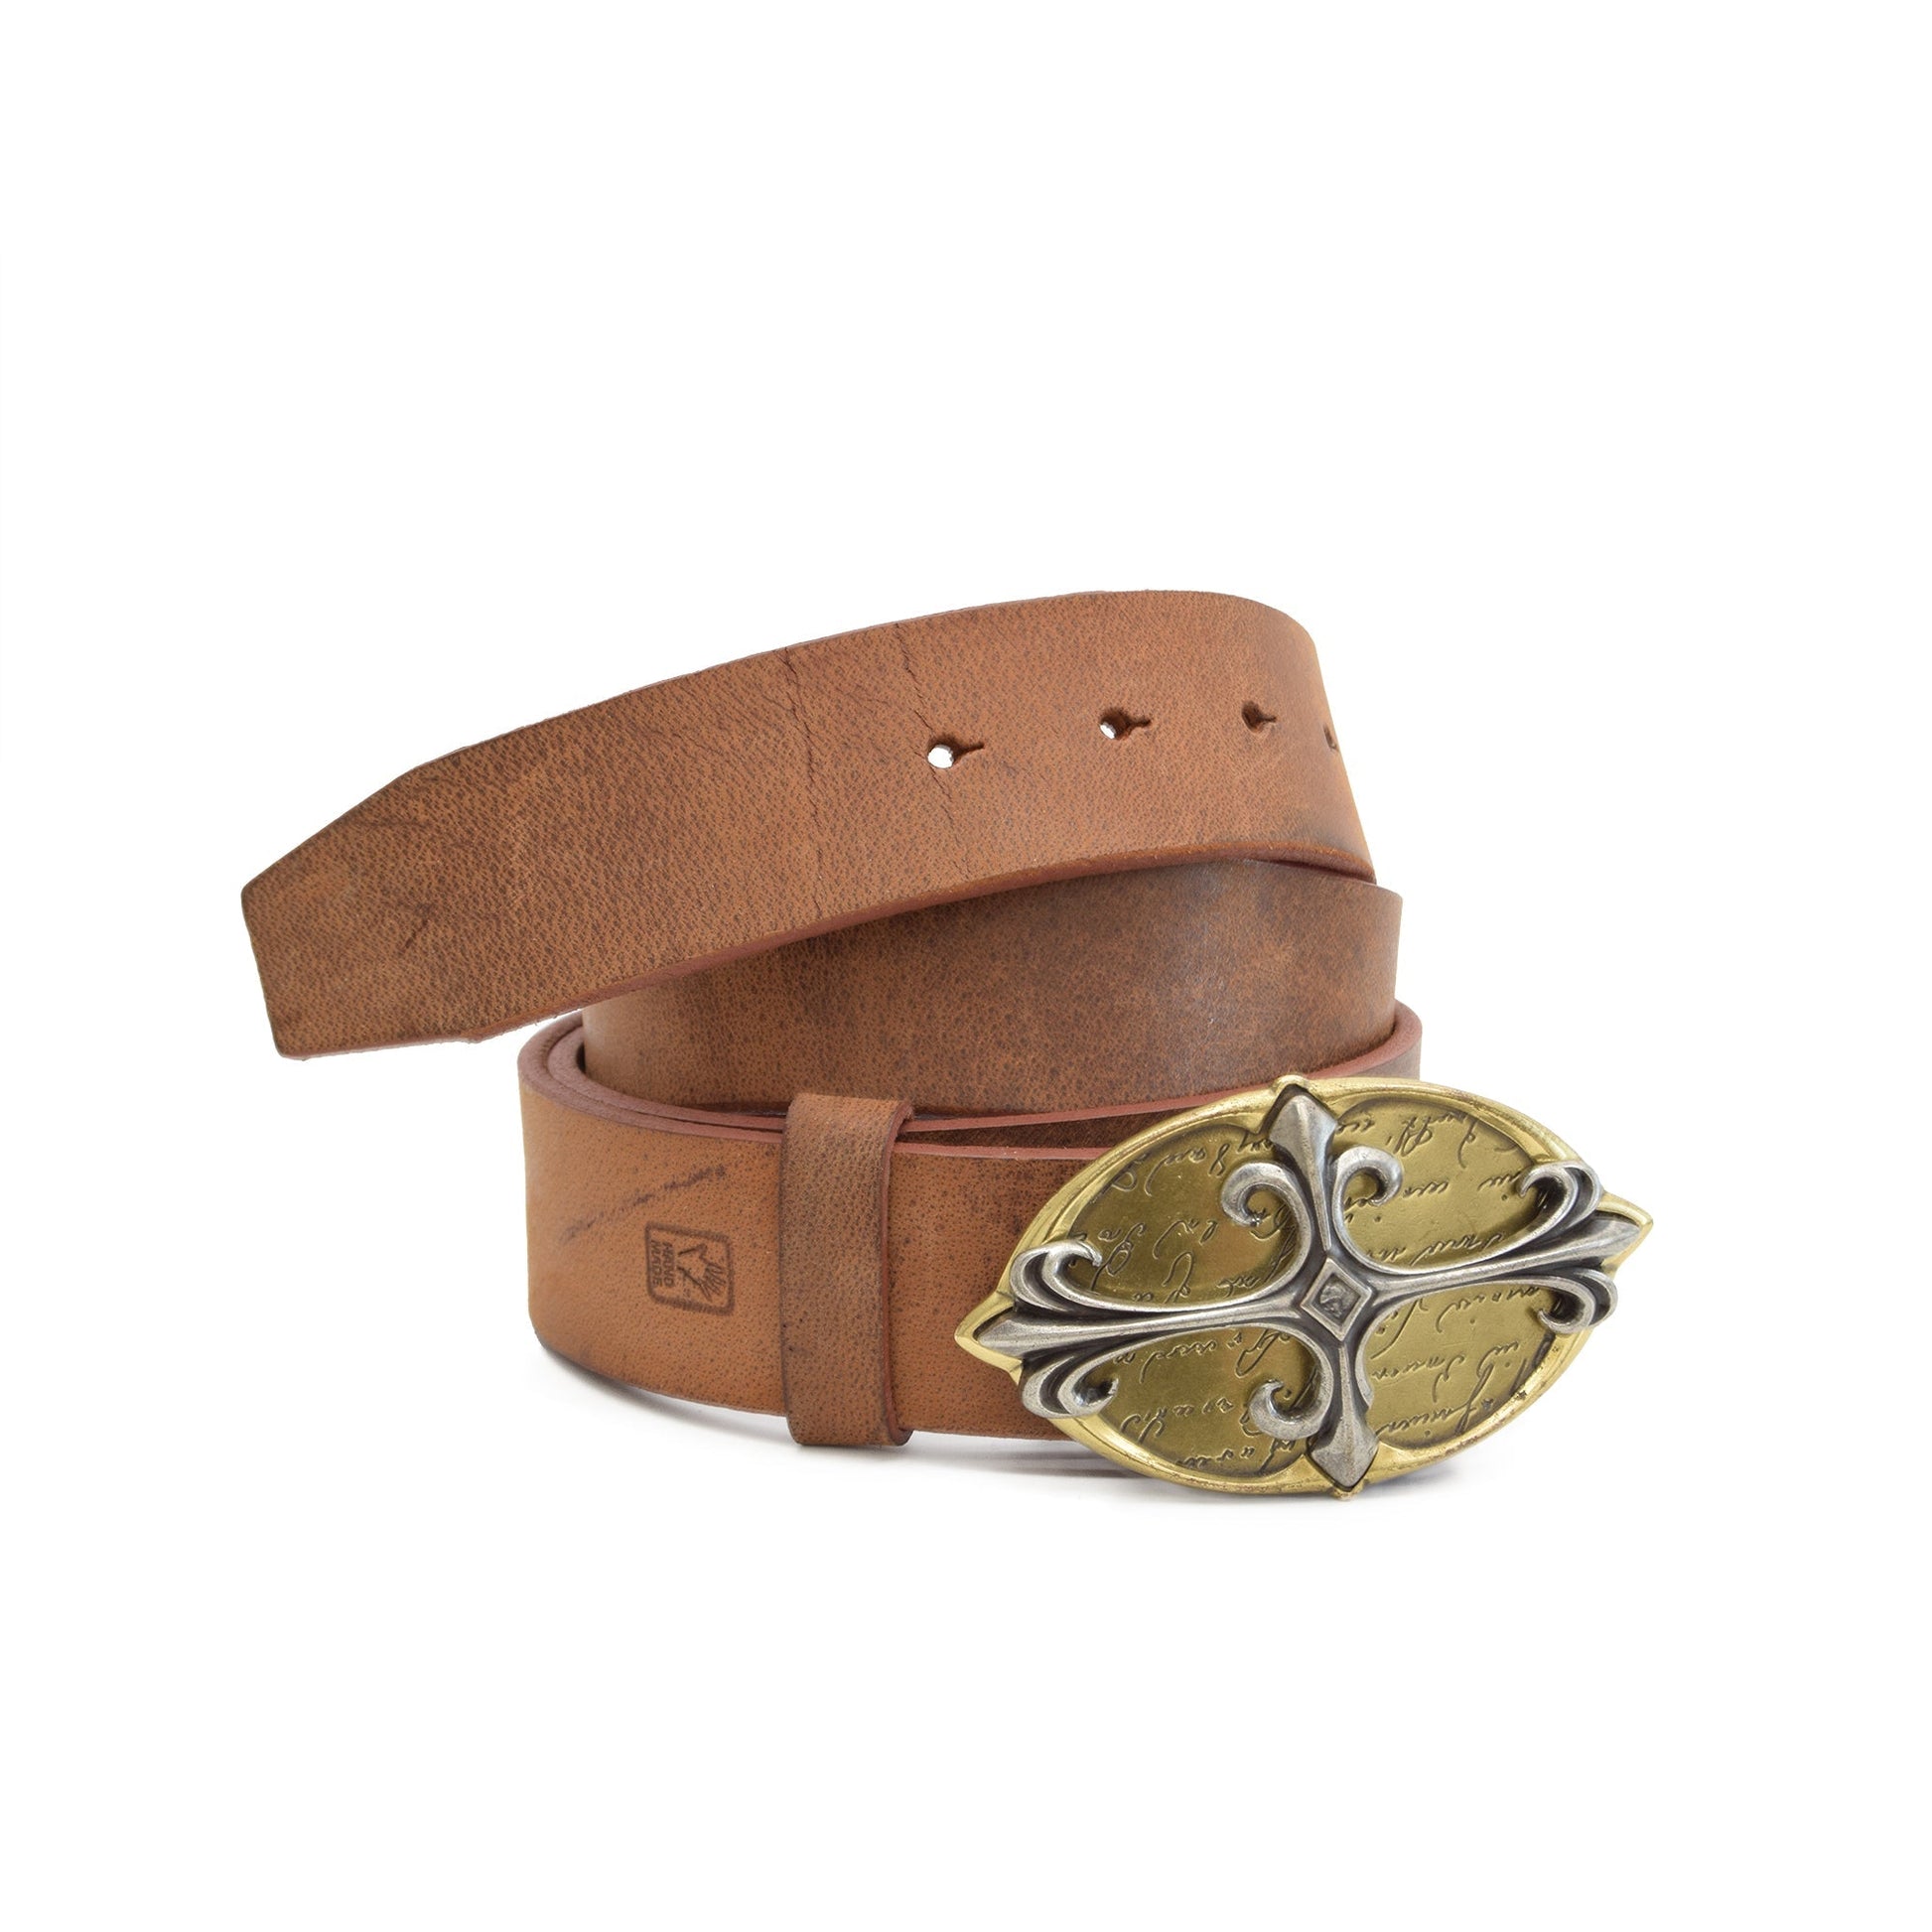 Pulse Leather Belt Tan with Changeable Buckle - Belts Zengoda Shop online from Artisan Brands